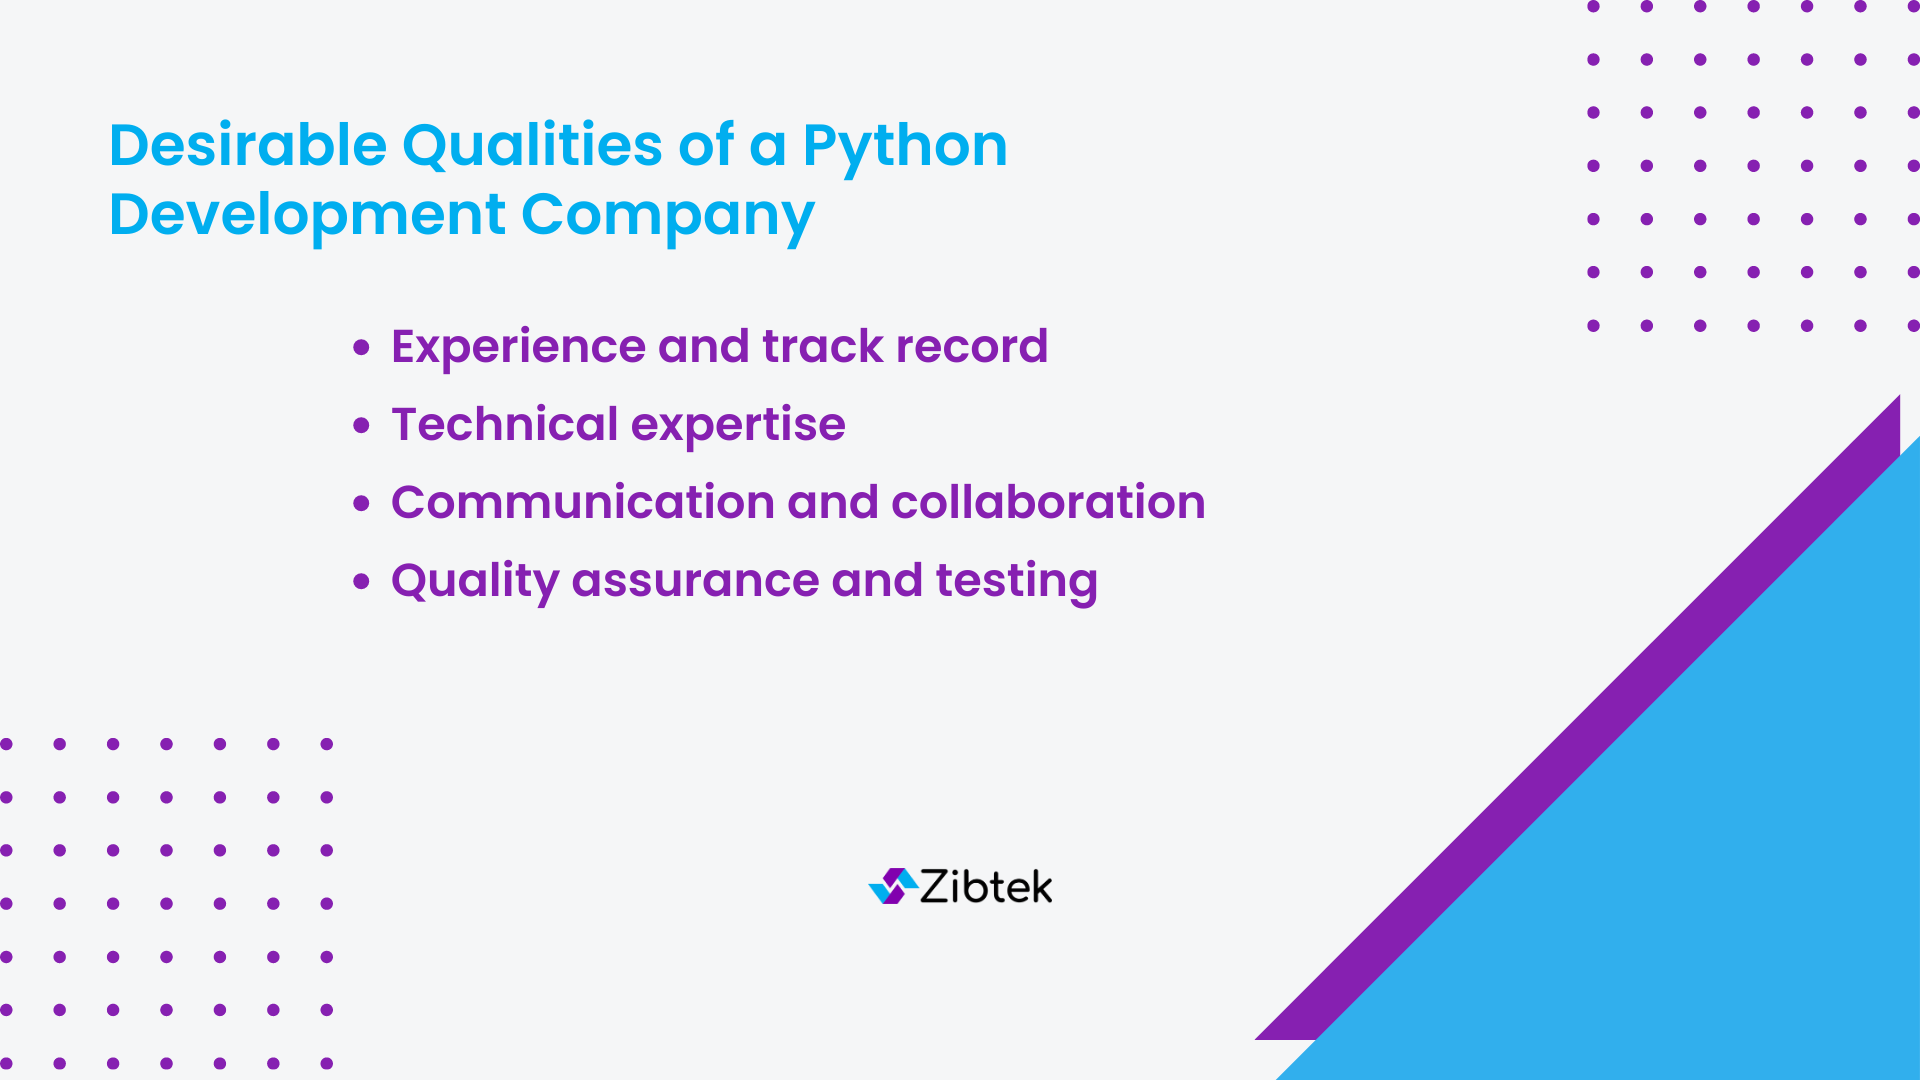 bulleted list of good python development company qualities